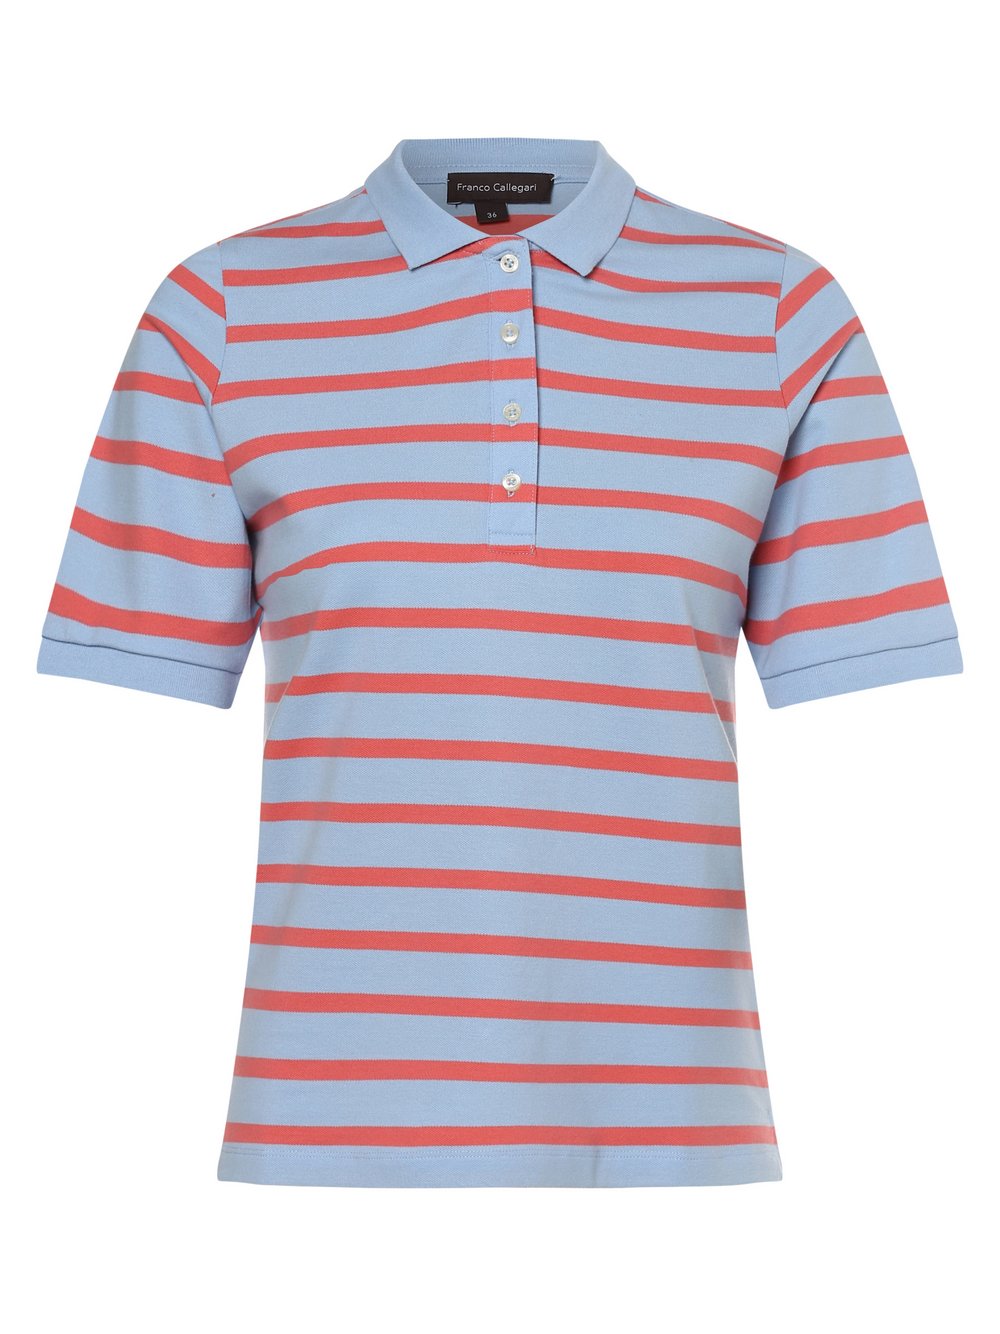 Franco Callegari - Damska koszulka polo, różowy|niebieski